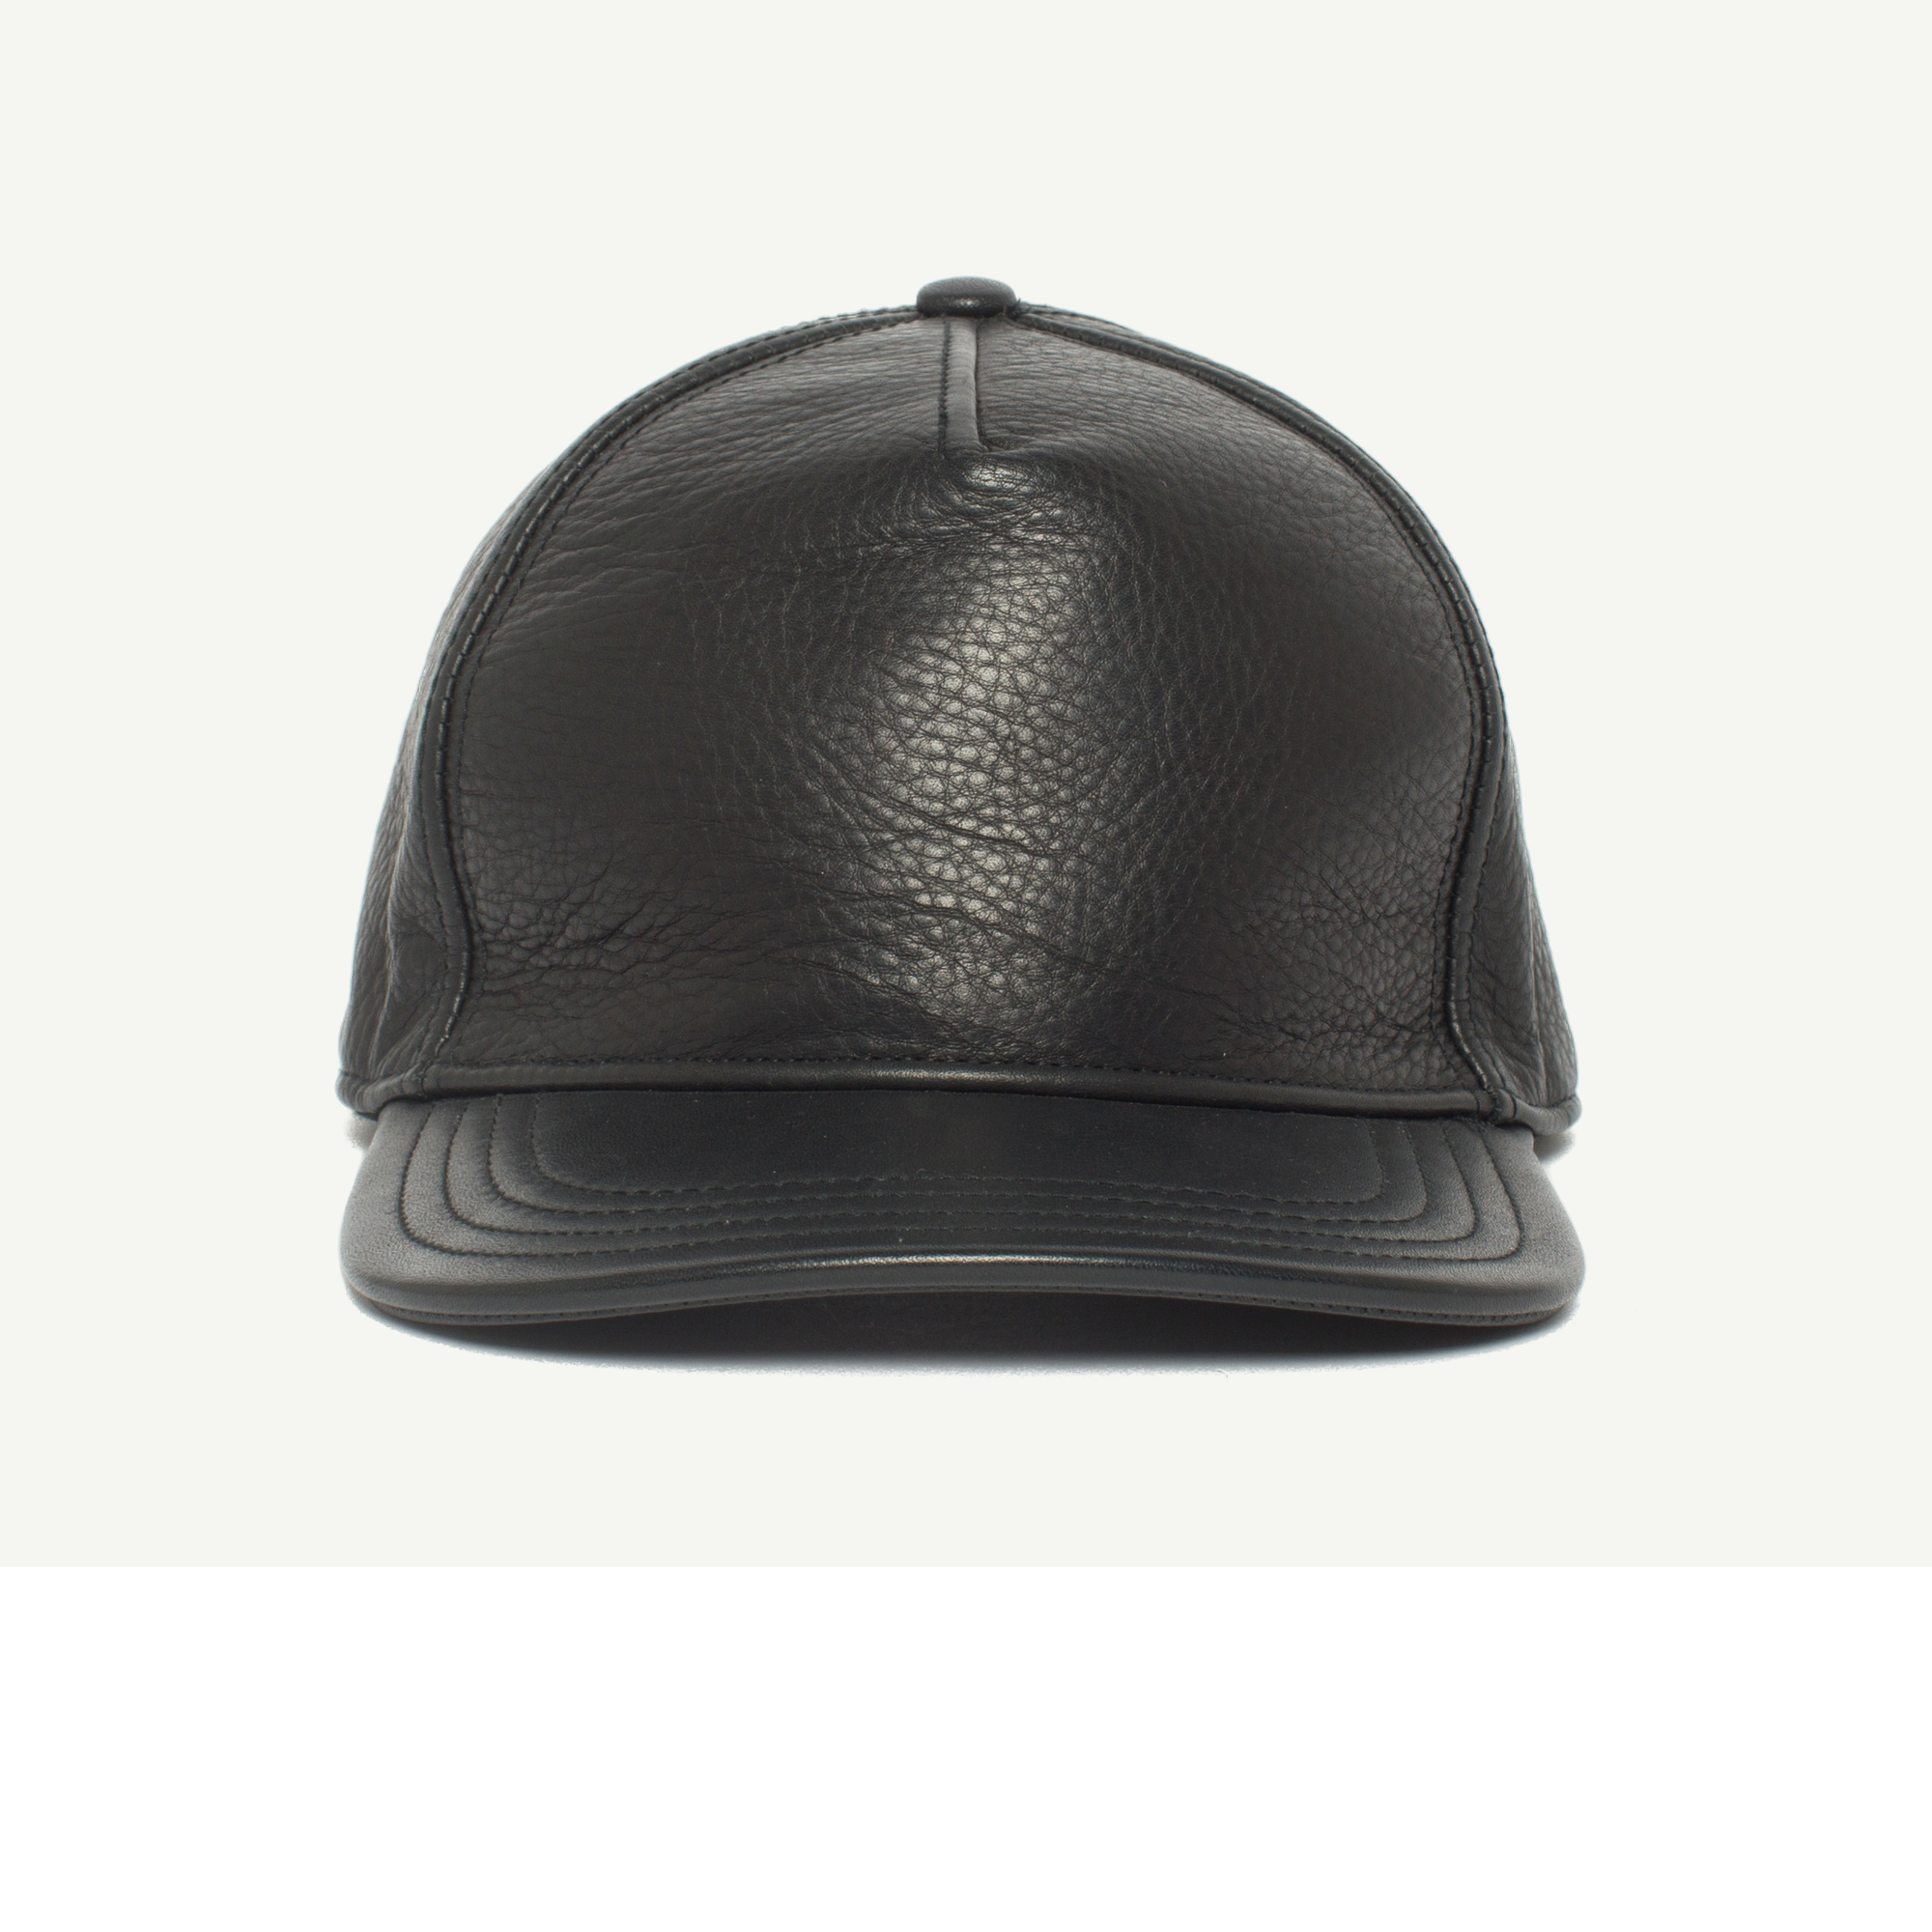 Baseball Hat PNG Front - 161060